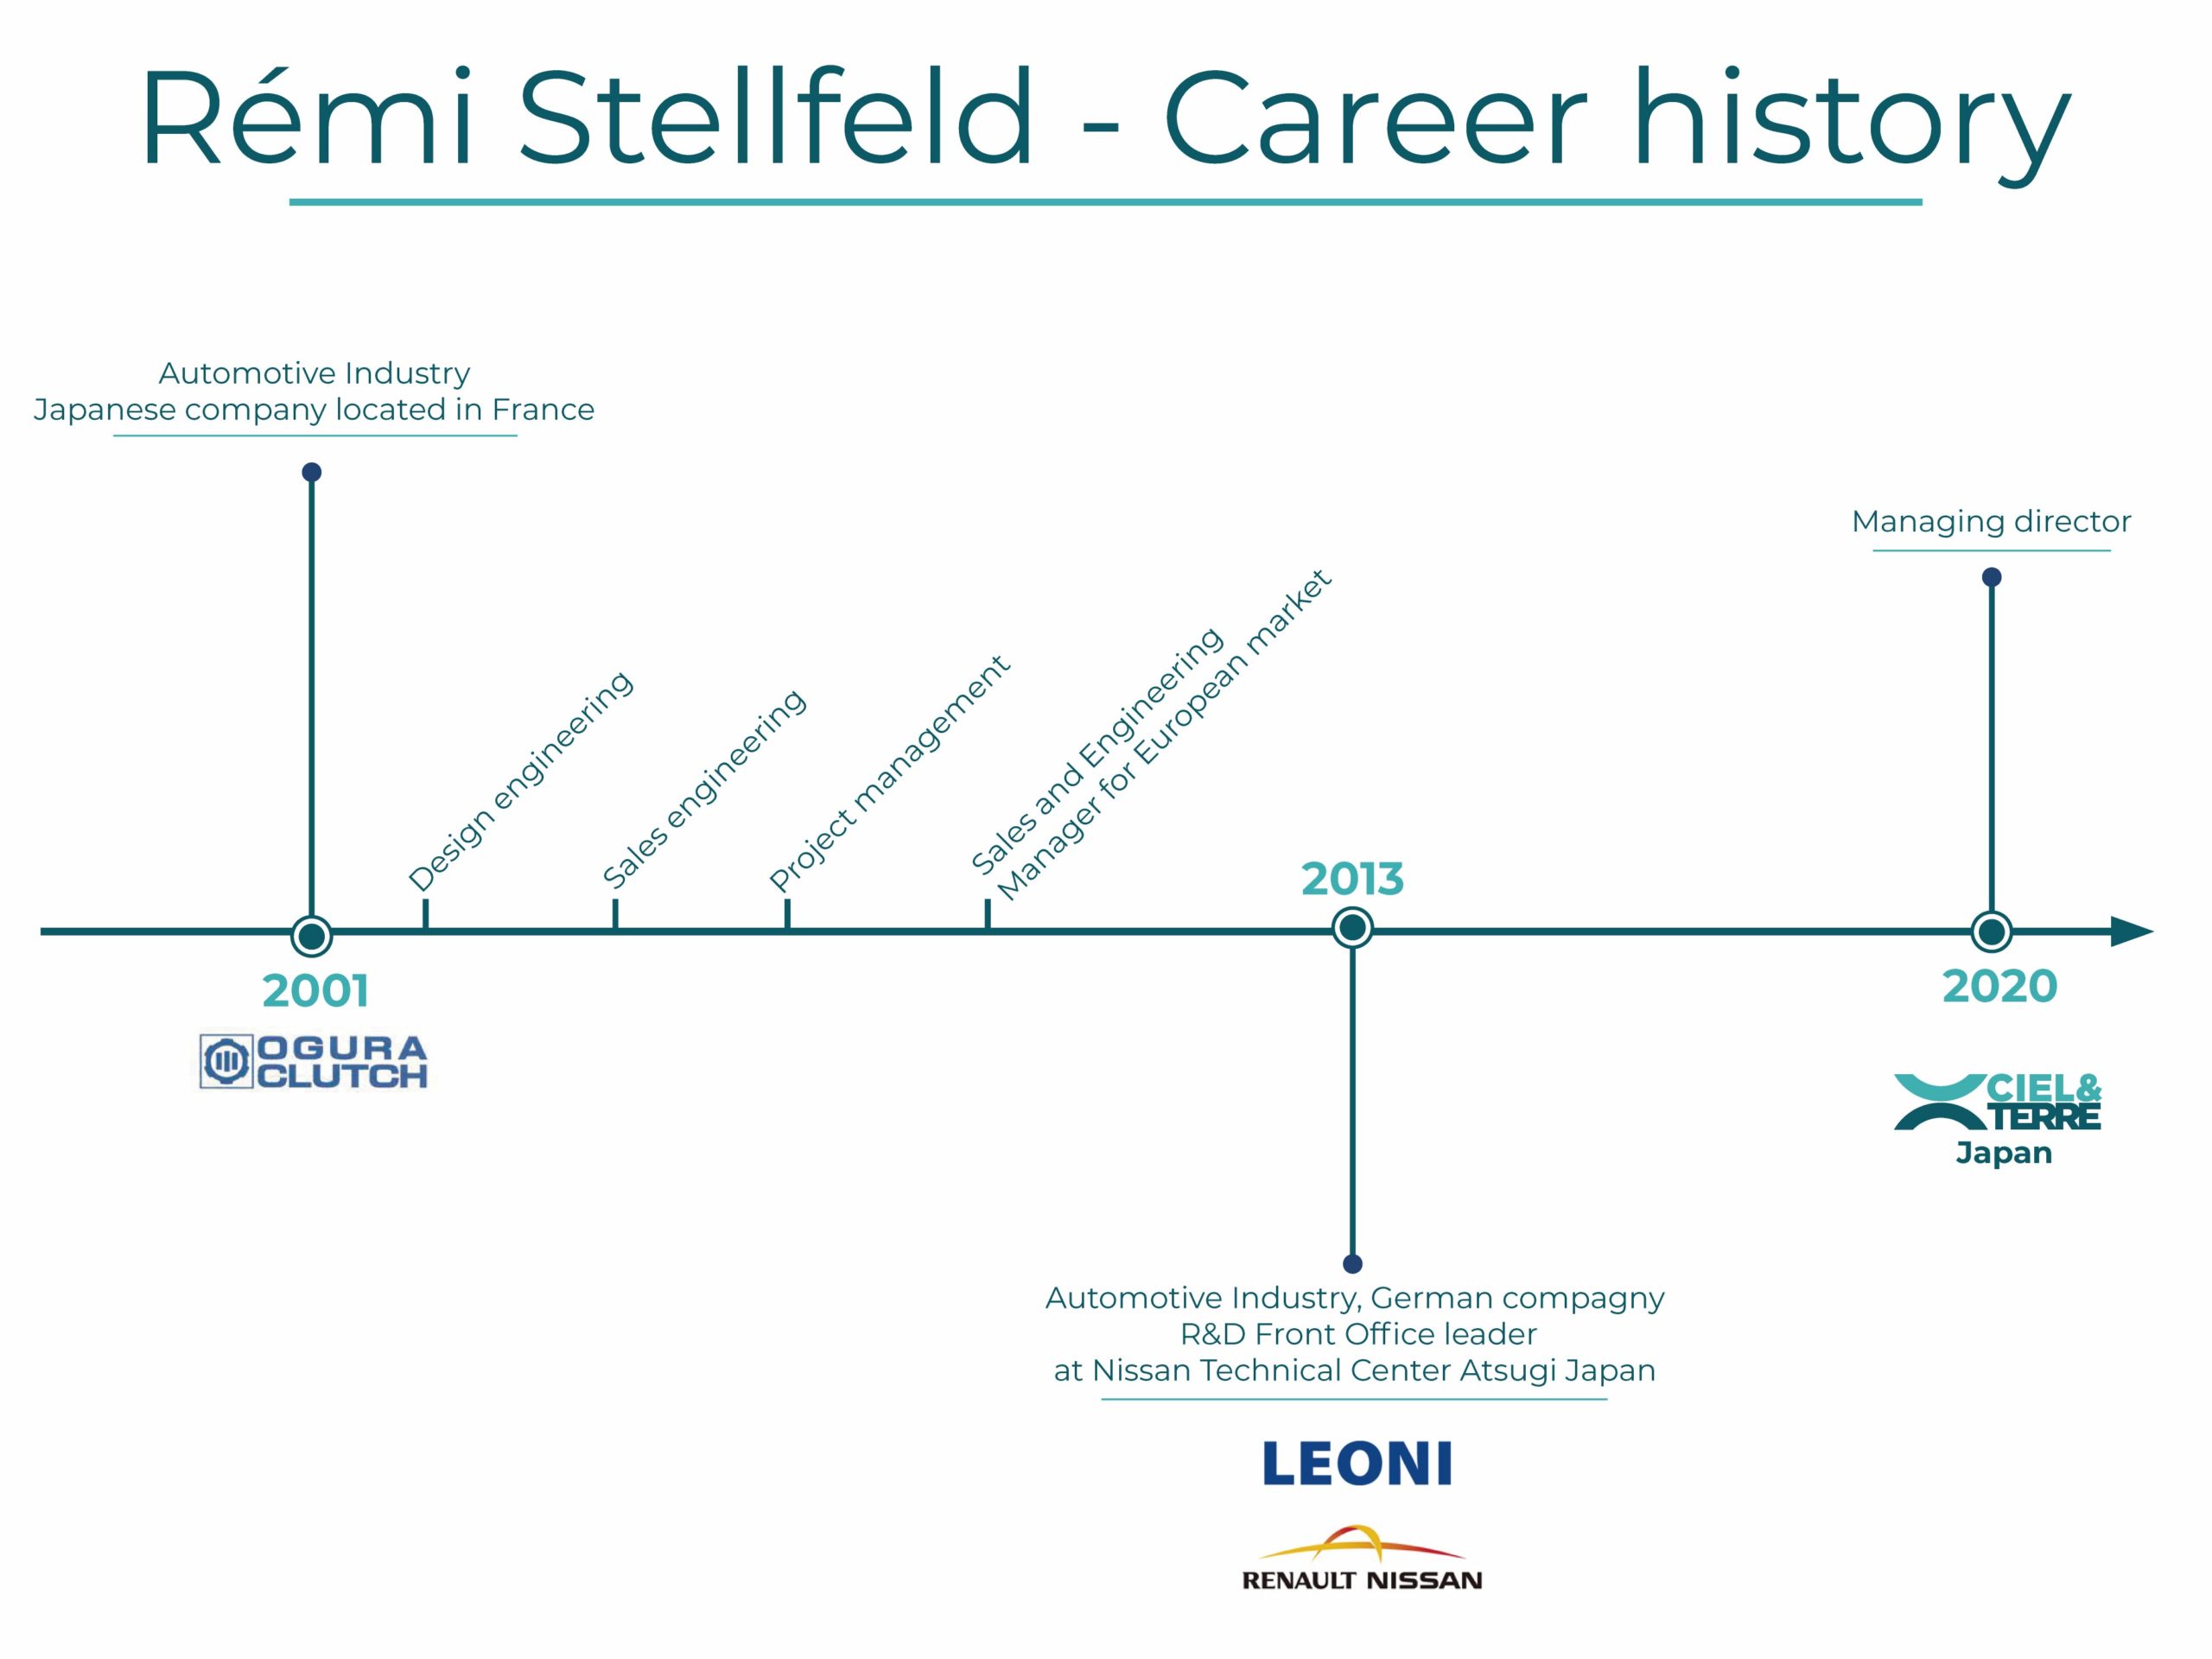 Remi Stellfeld's career journey managing director of Ciel et Terre Japan